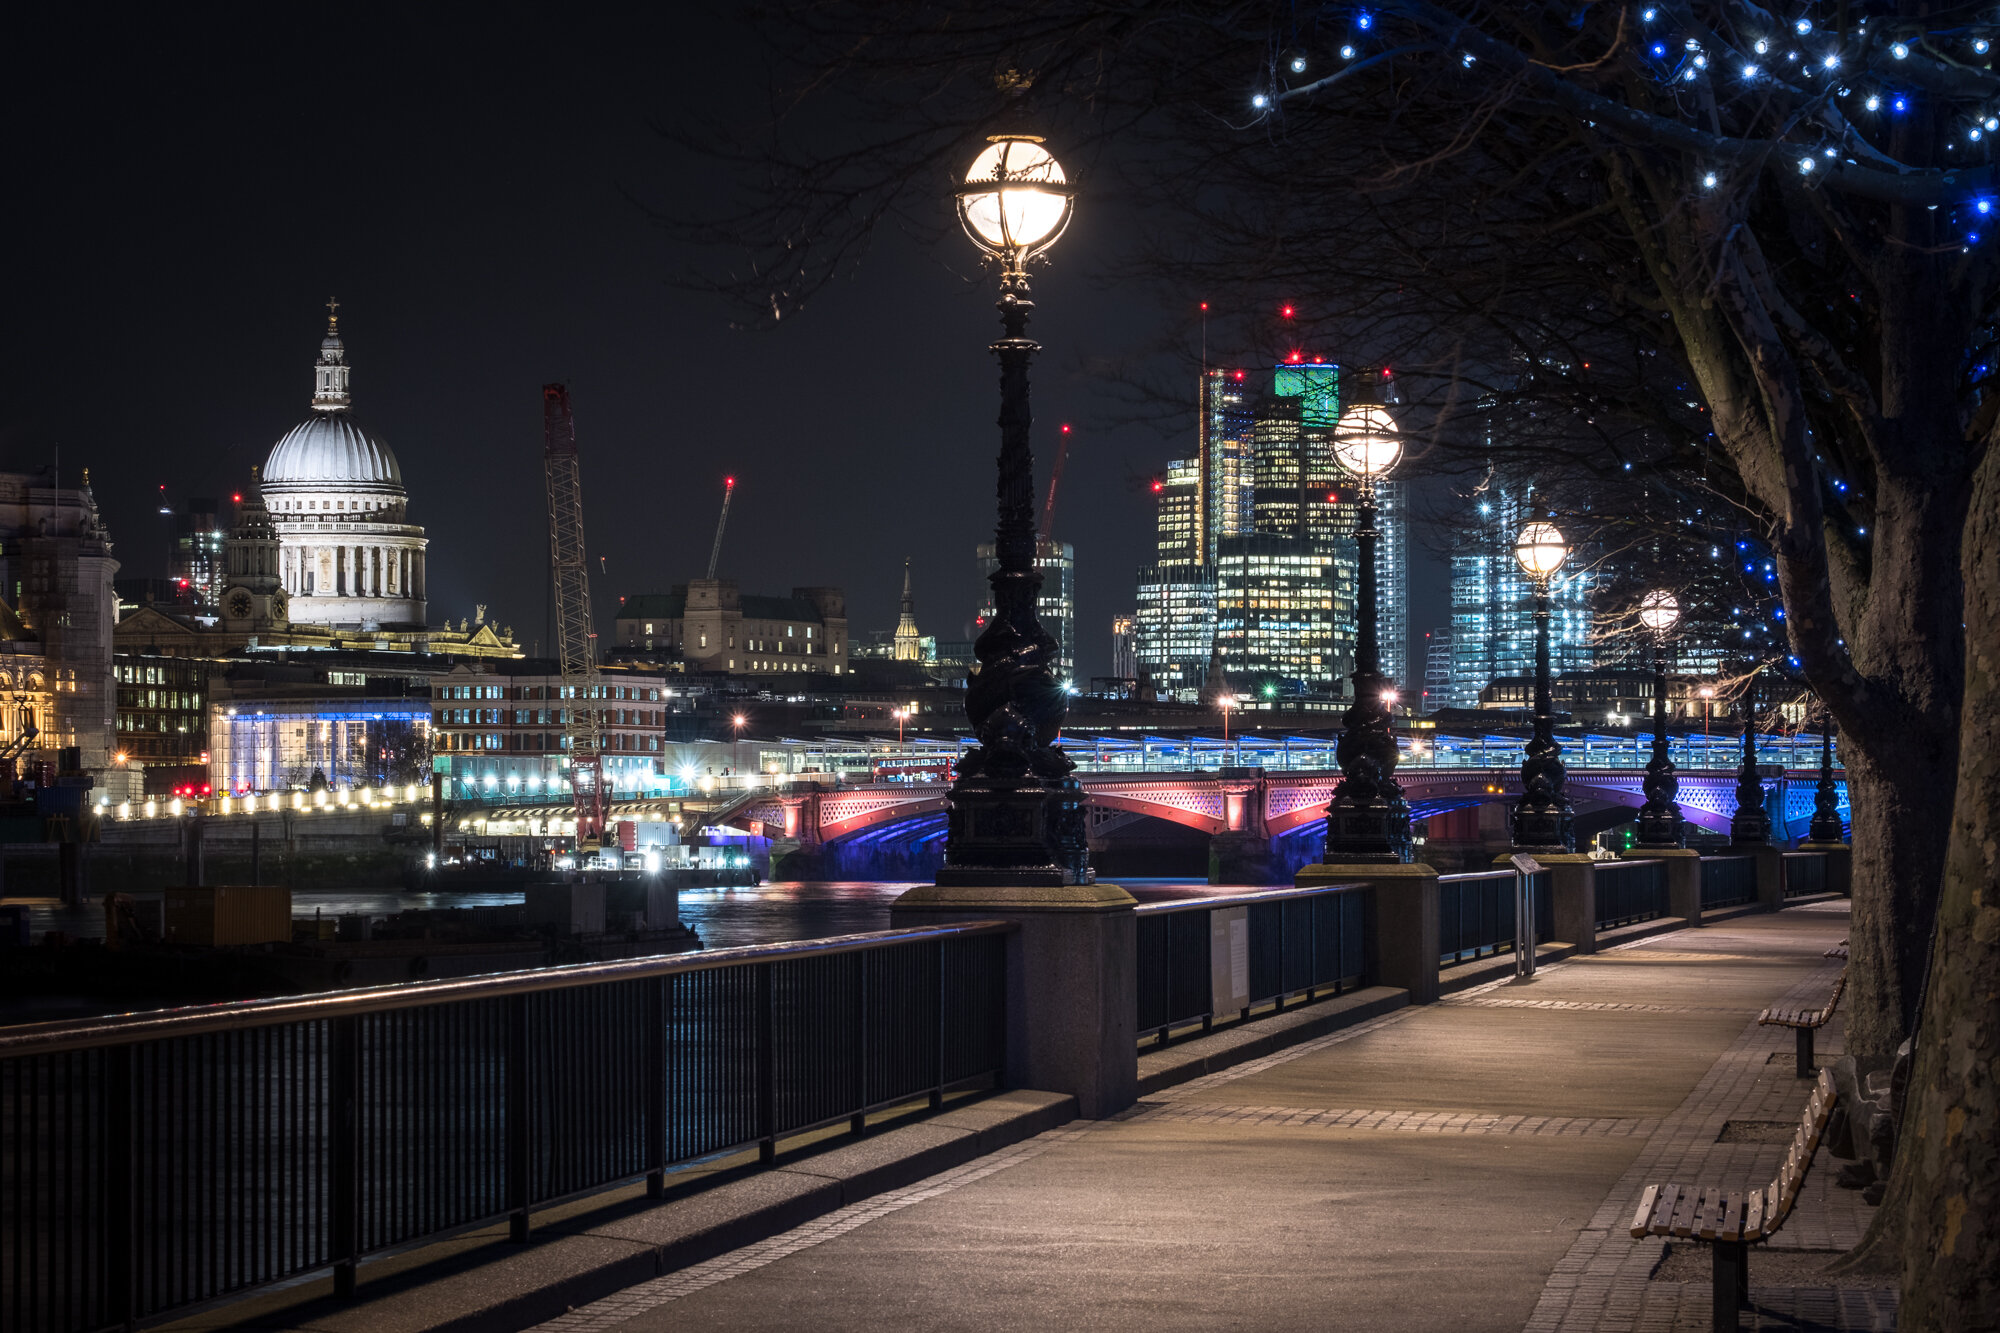 visit london by night